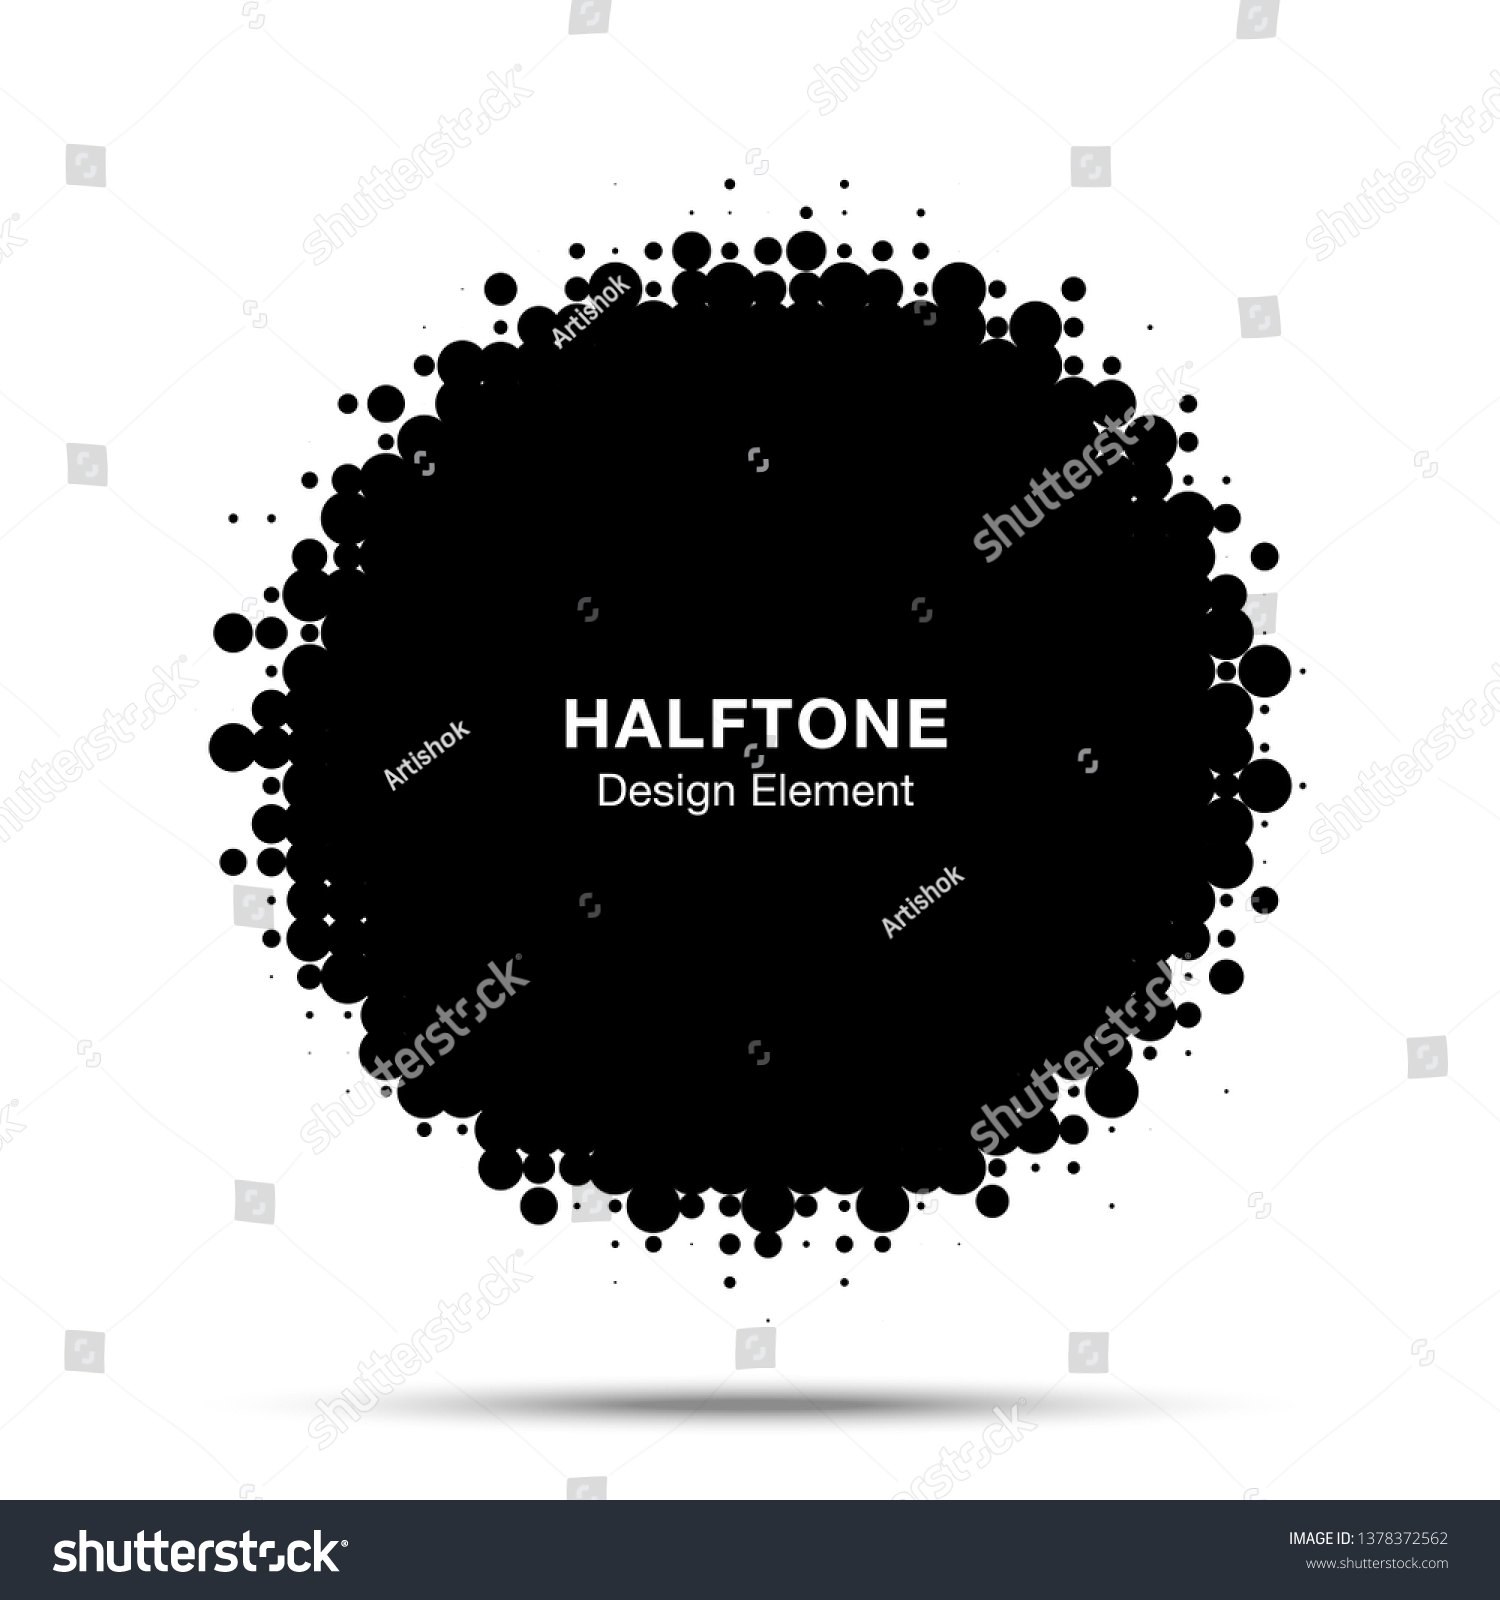 Halftone circle frame abstract dots logo emblem design element. Half tone circular icon. Grunge round border using halftone circle dots raster texture.  #1378372562